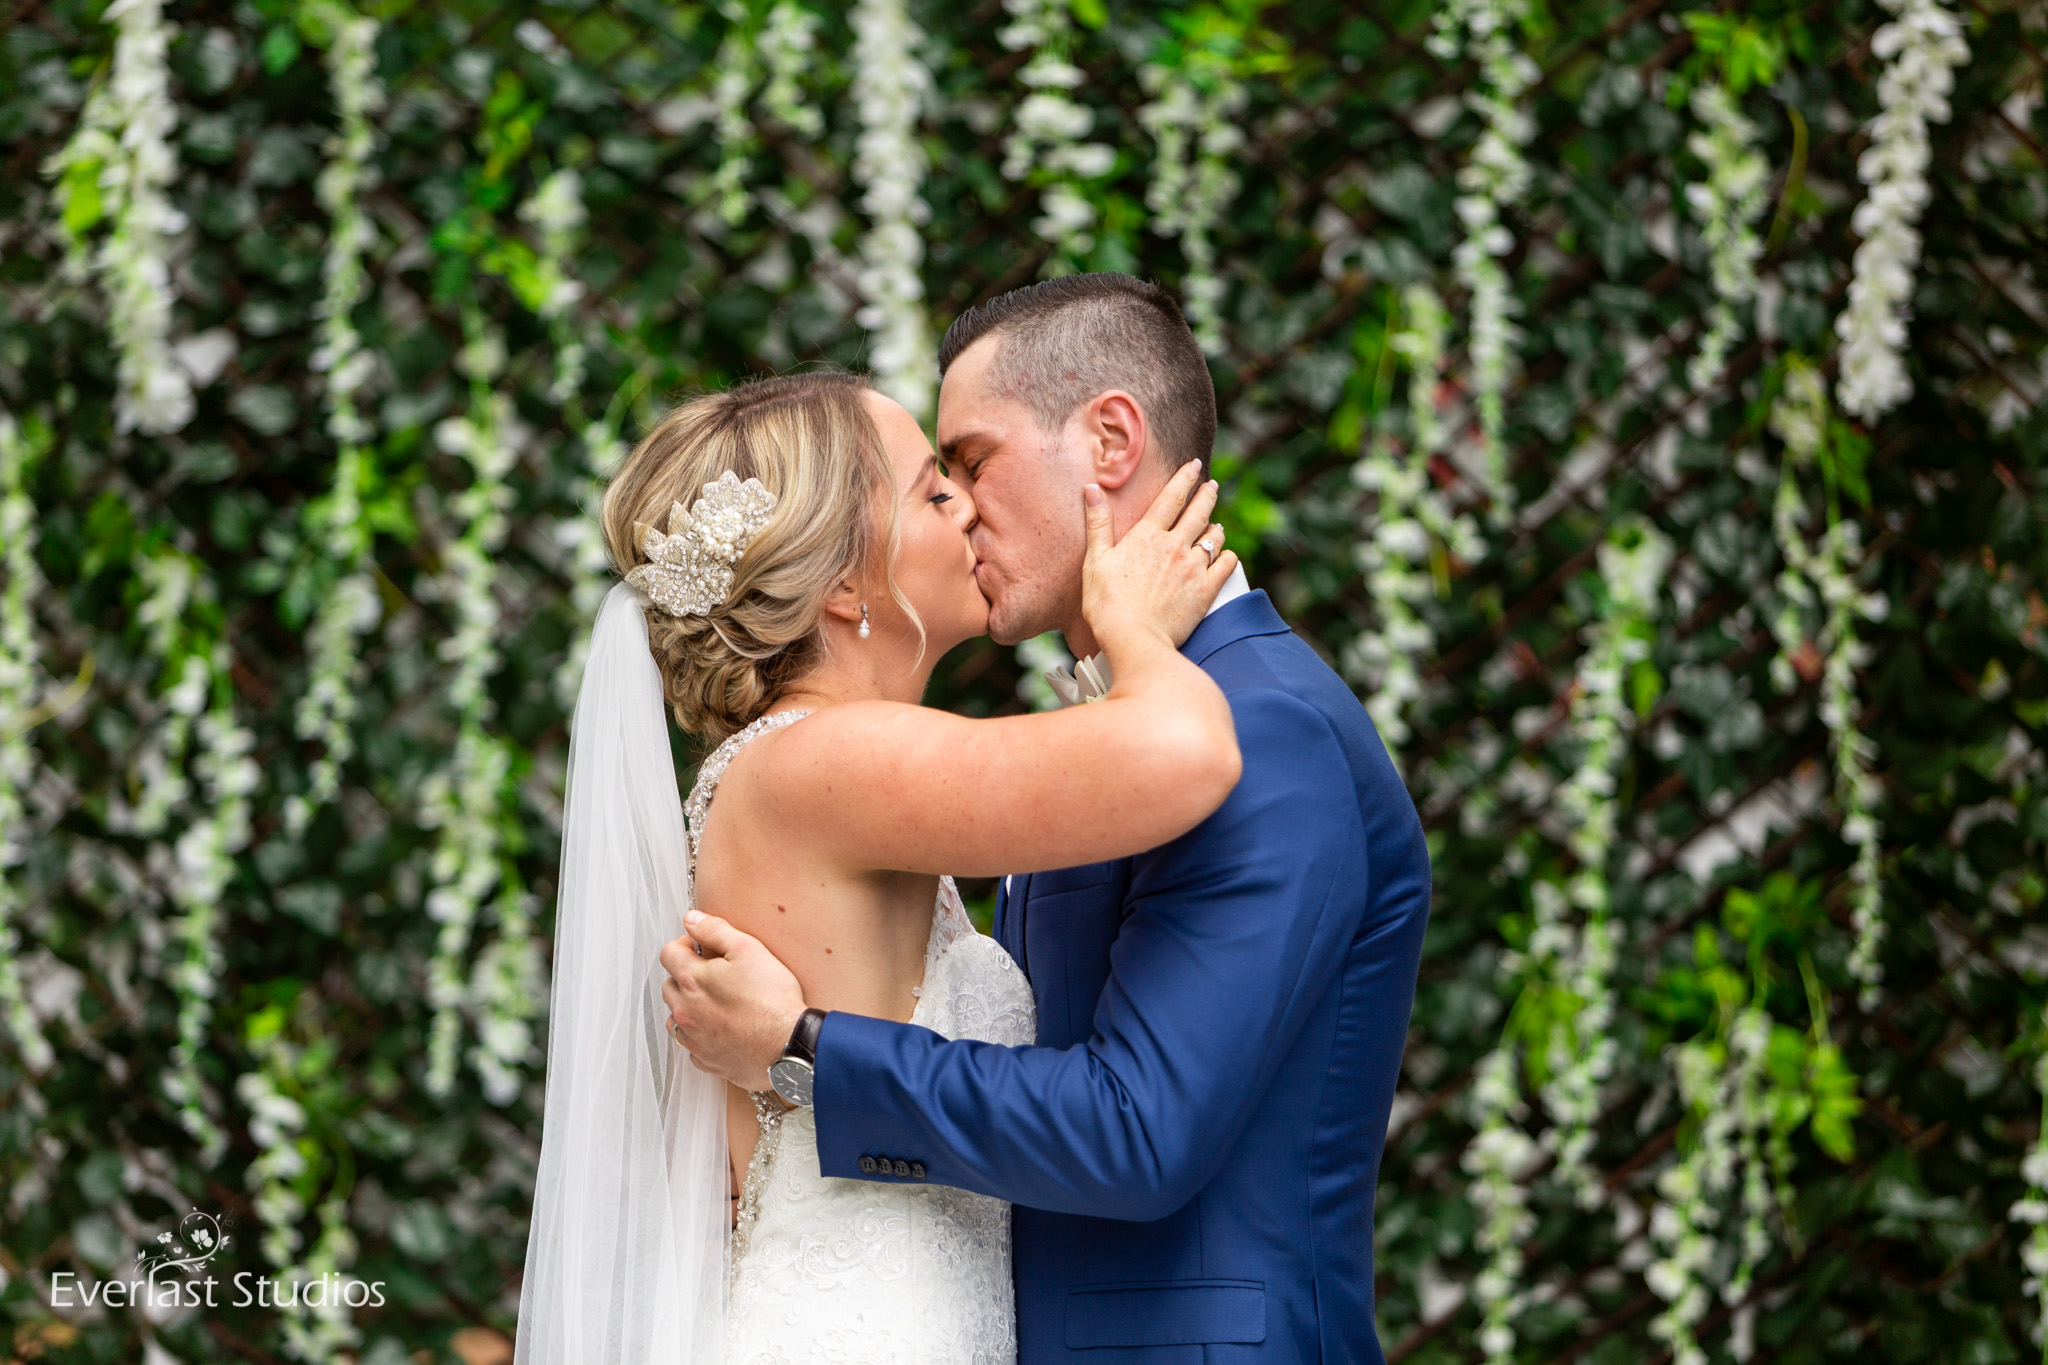 First Kiss, Wedding Ceremony at Stamford Plaza Brisbane